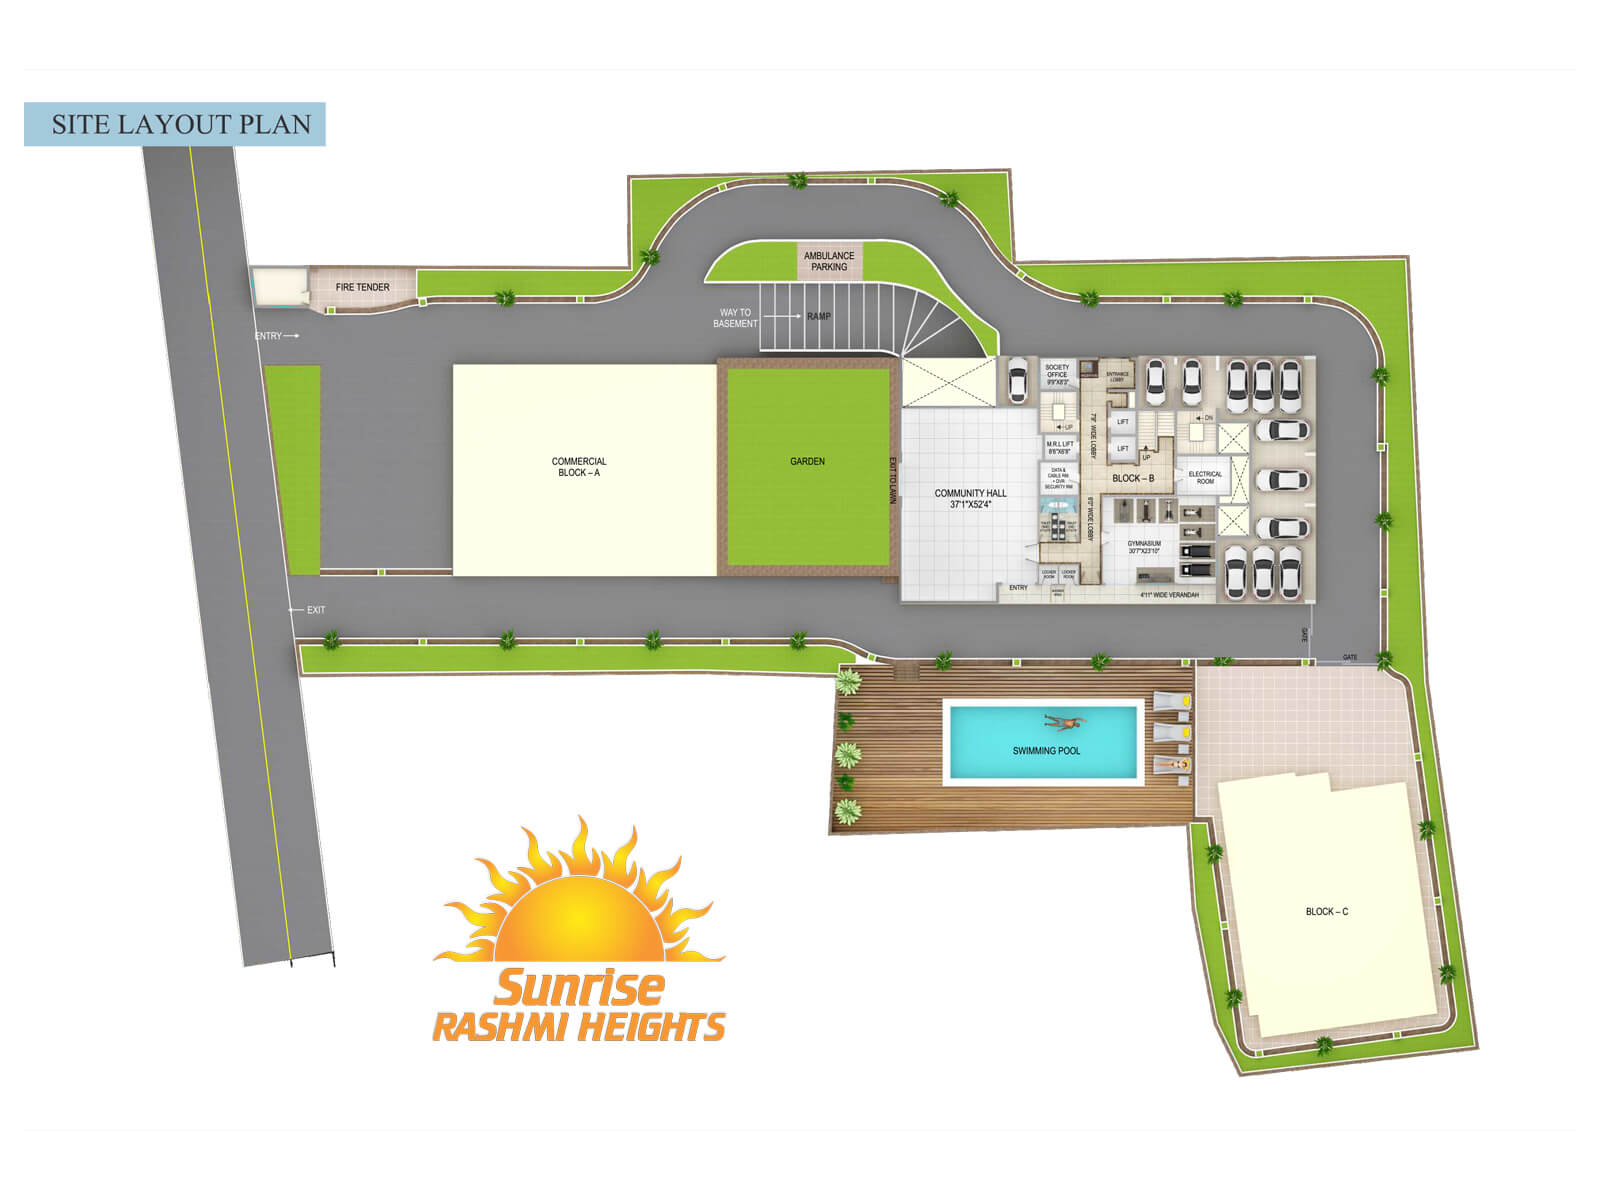 Sunrise Rashmi Heights floor plan layout